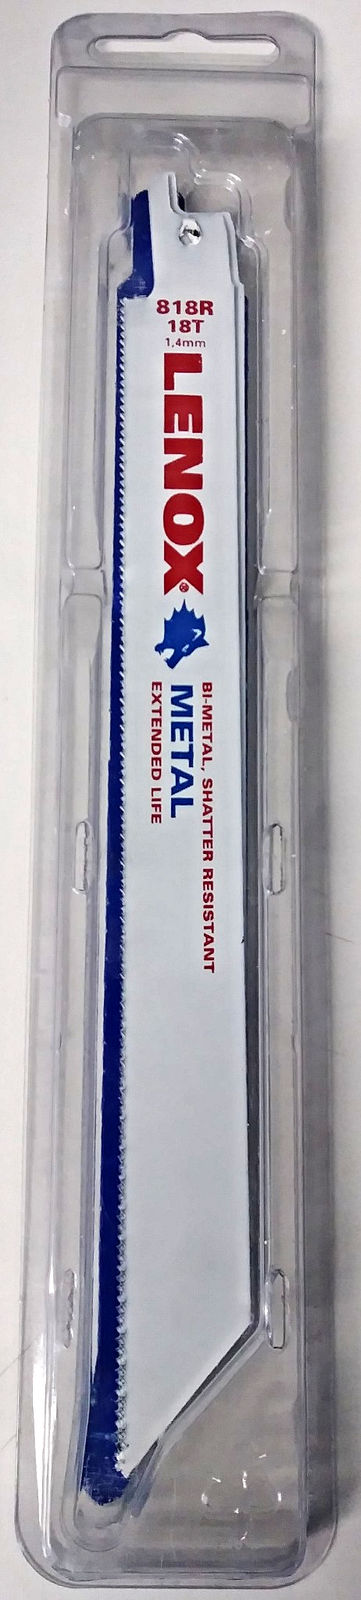 Lenox 20578-818R 8" x 18T Metal Cutting Reciprocating Saw Blades 5 Pack USA